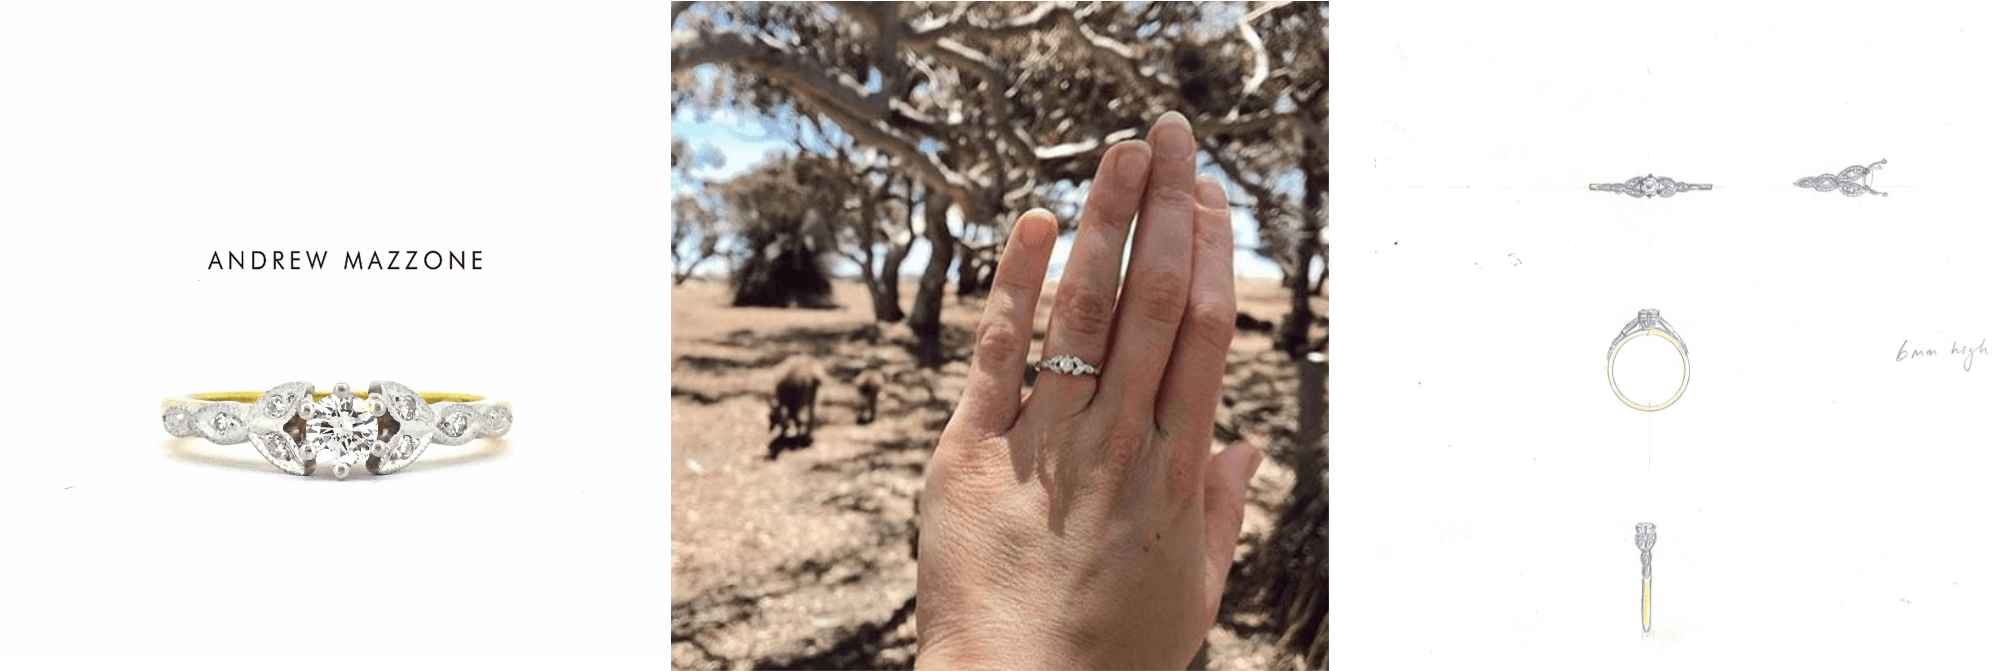 Scott & Lauren's engagement ring